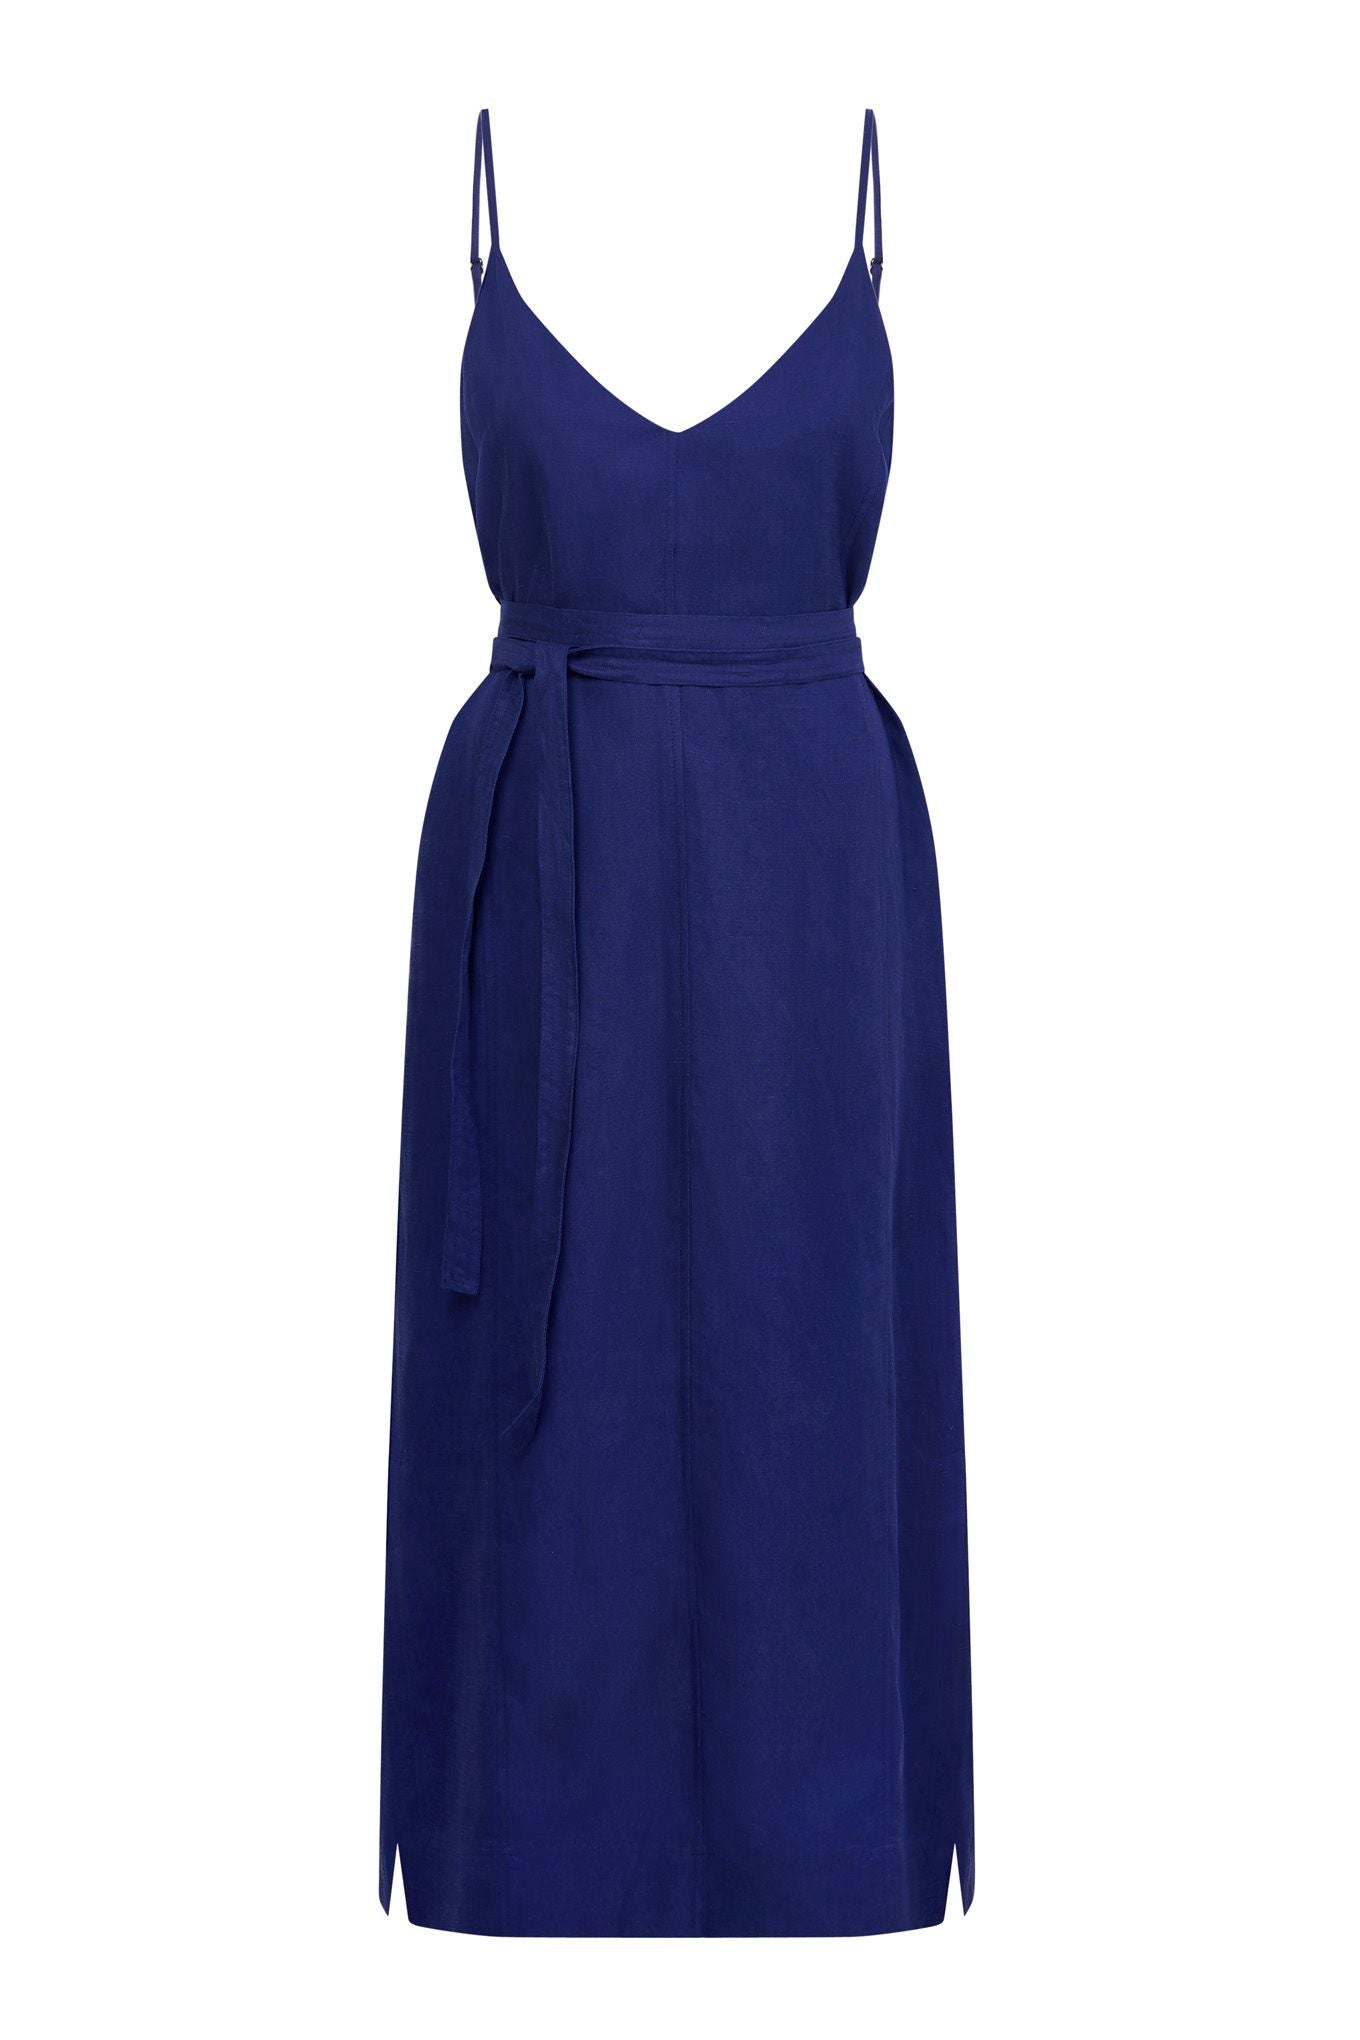 Dark blue dress IMAN made of Tencel and linen by Komodo